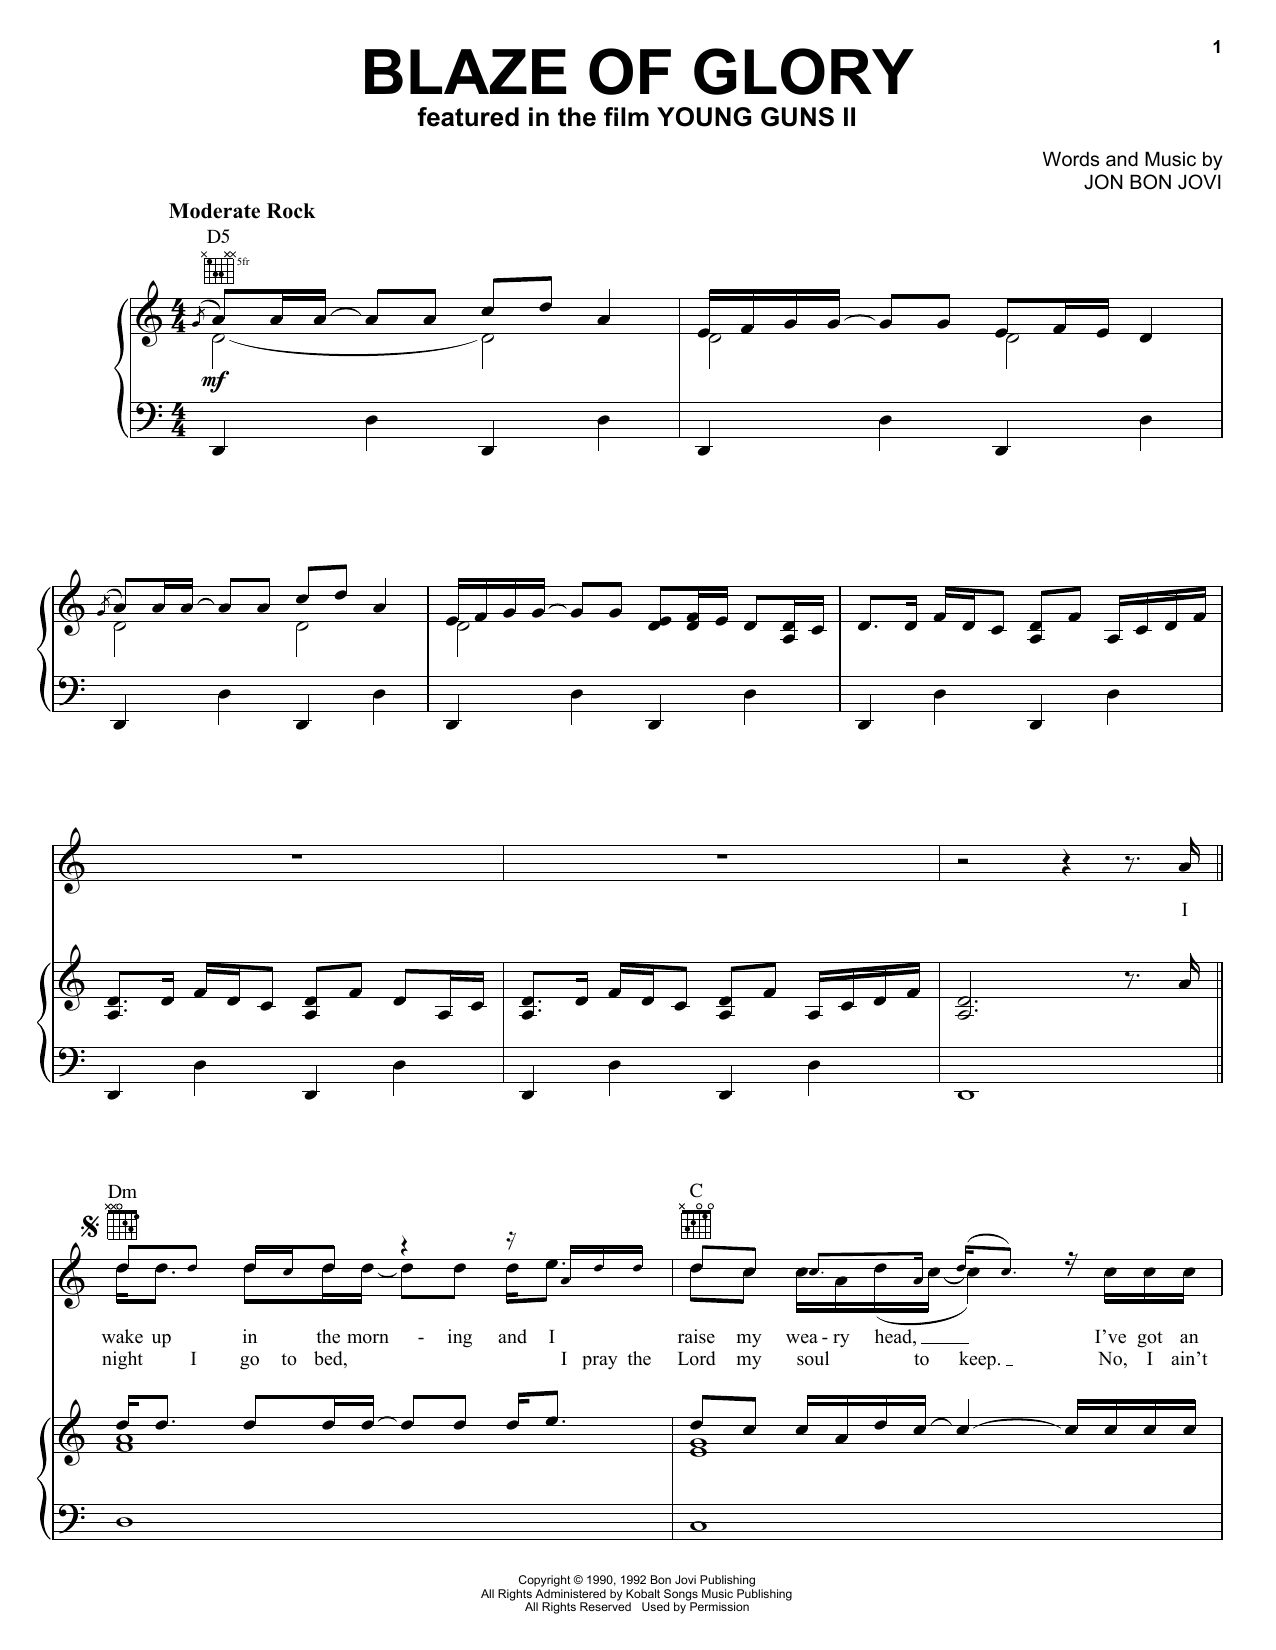 Jon Bon Jovi Blaze Of Glory Sheet Music Notes & Chords for Cello - Download or Print PDF